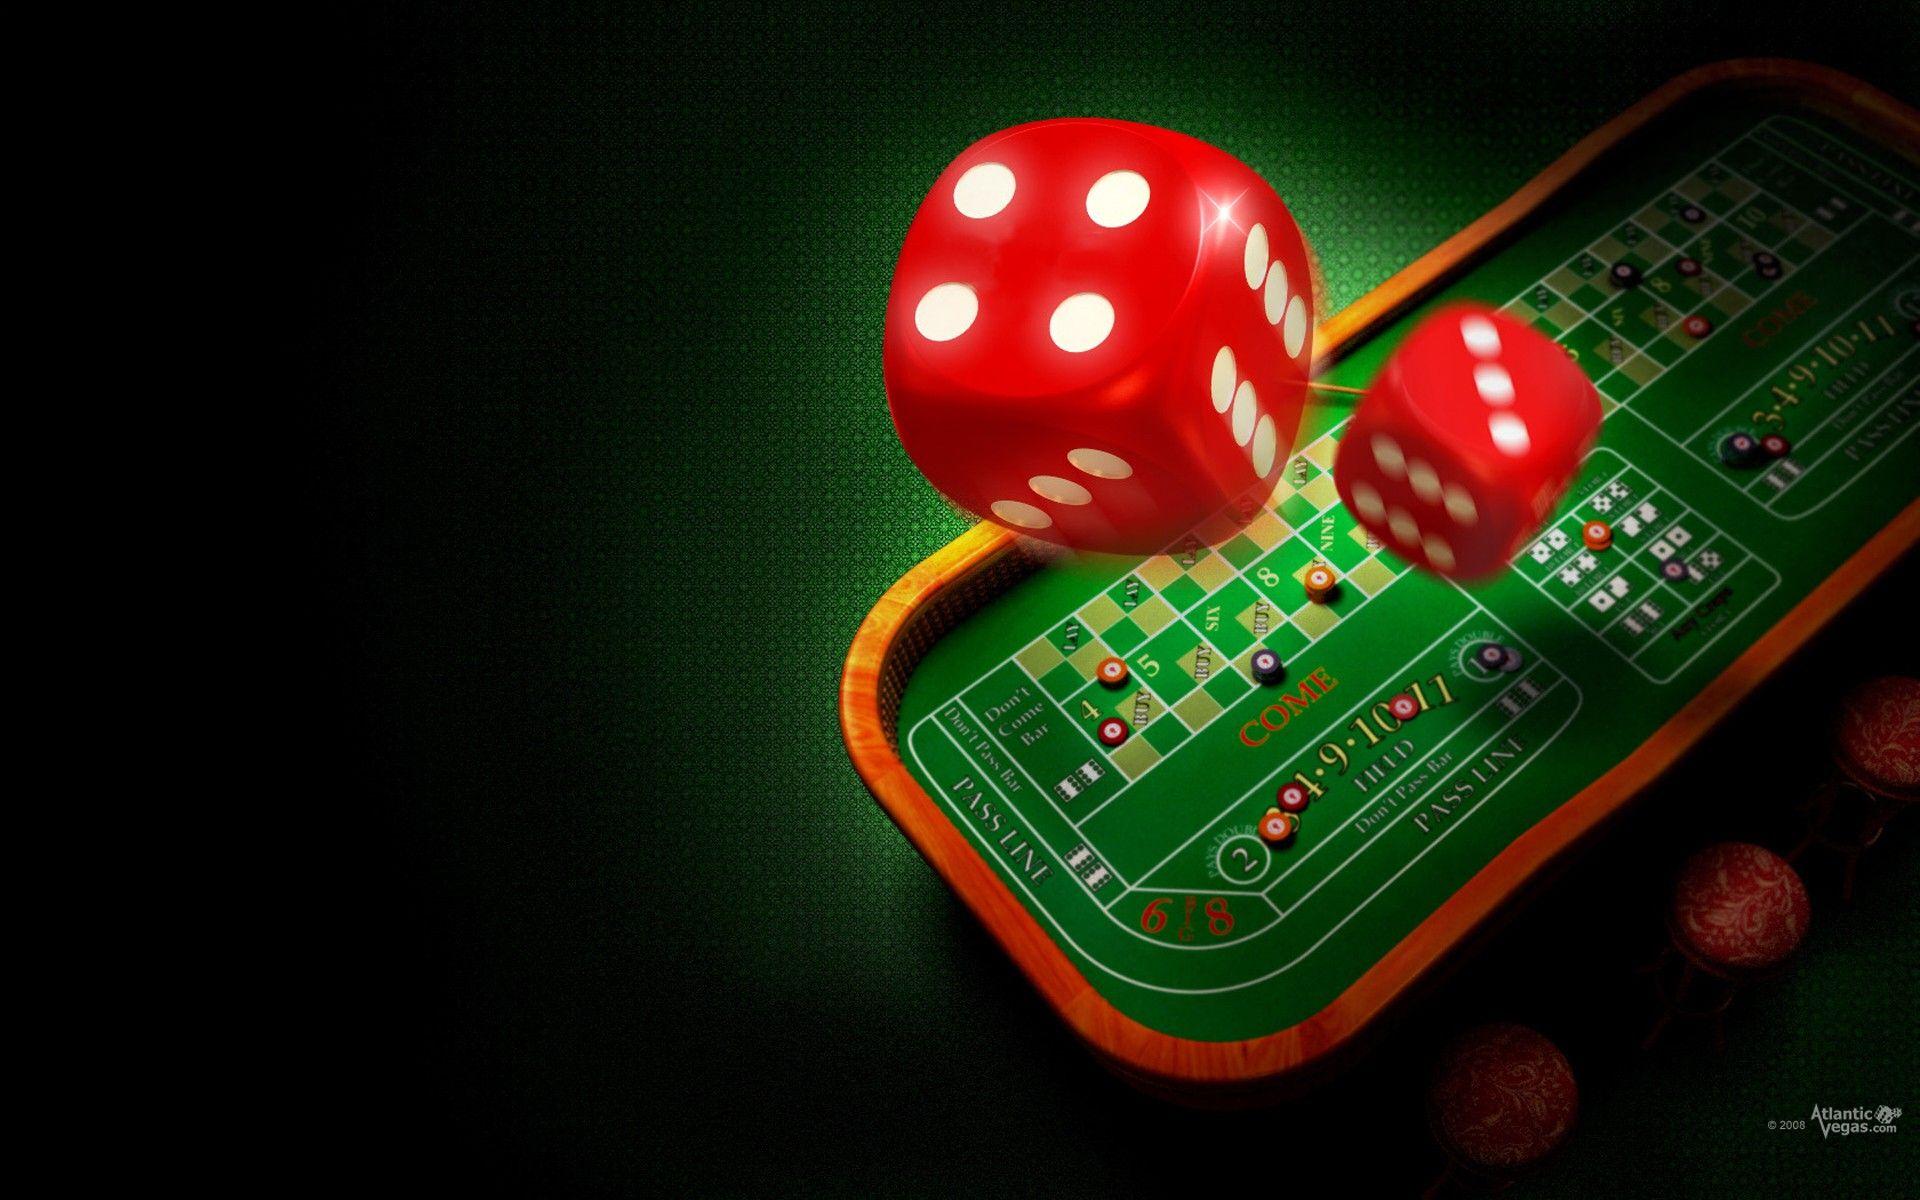 x games casino download